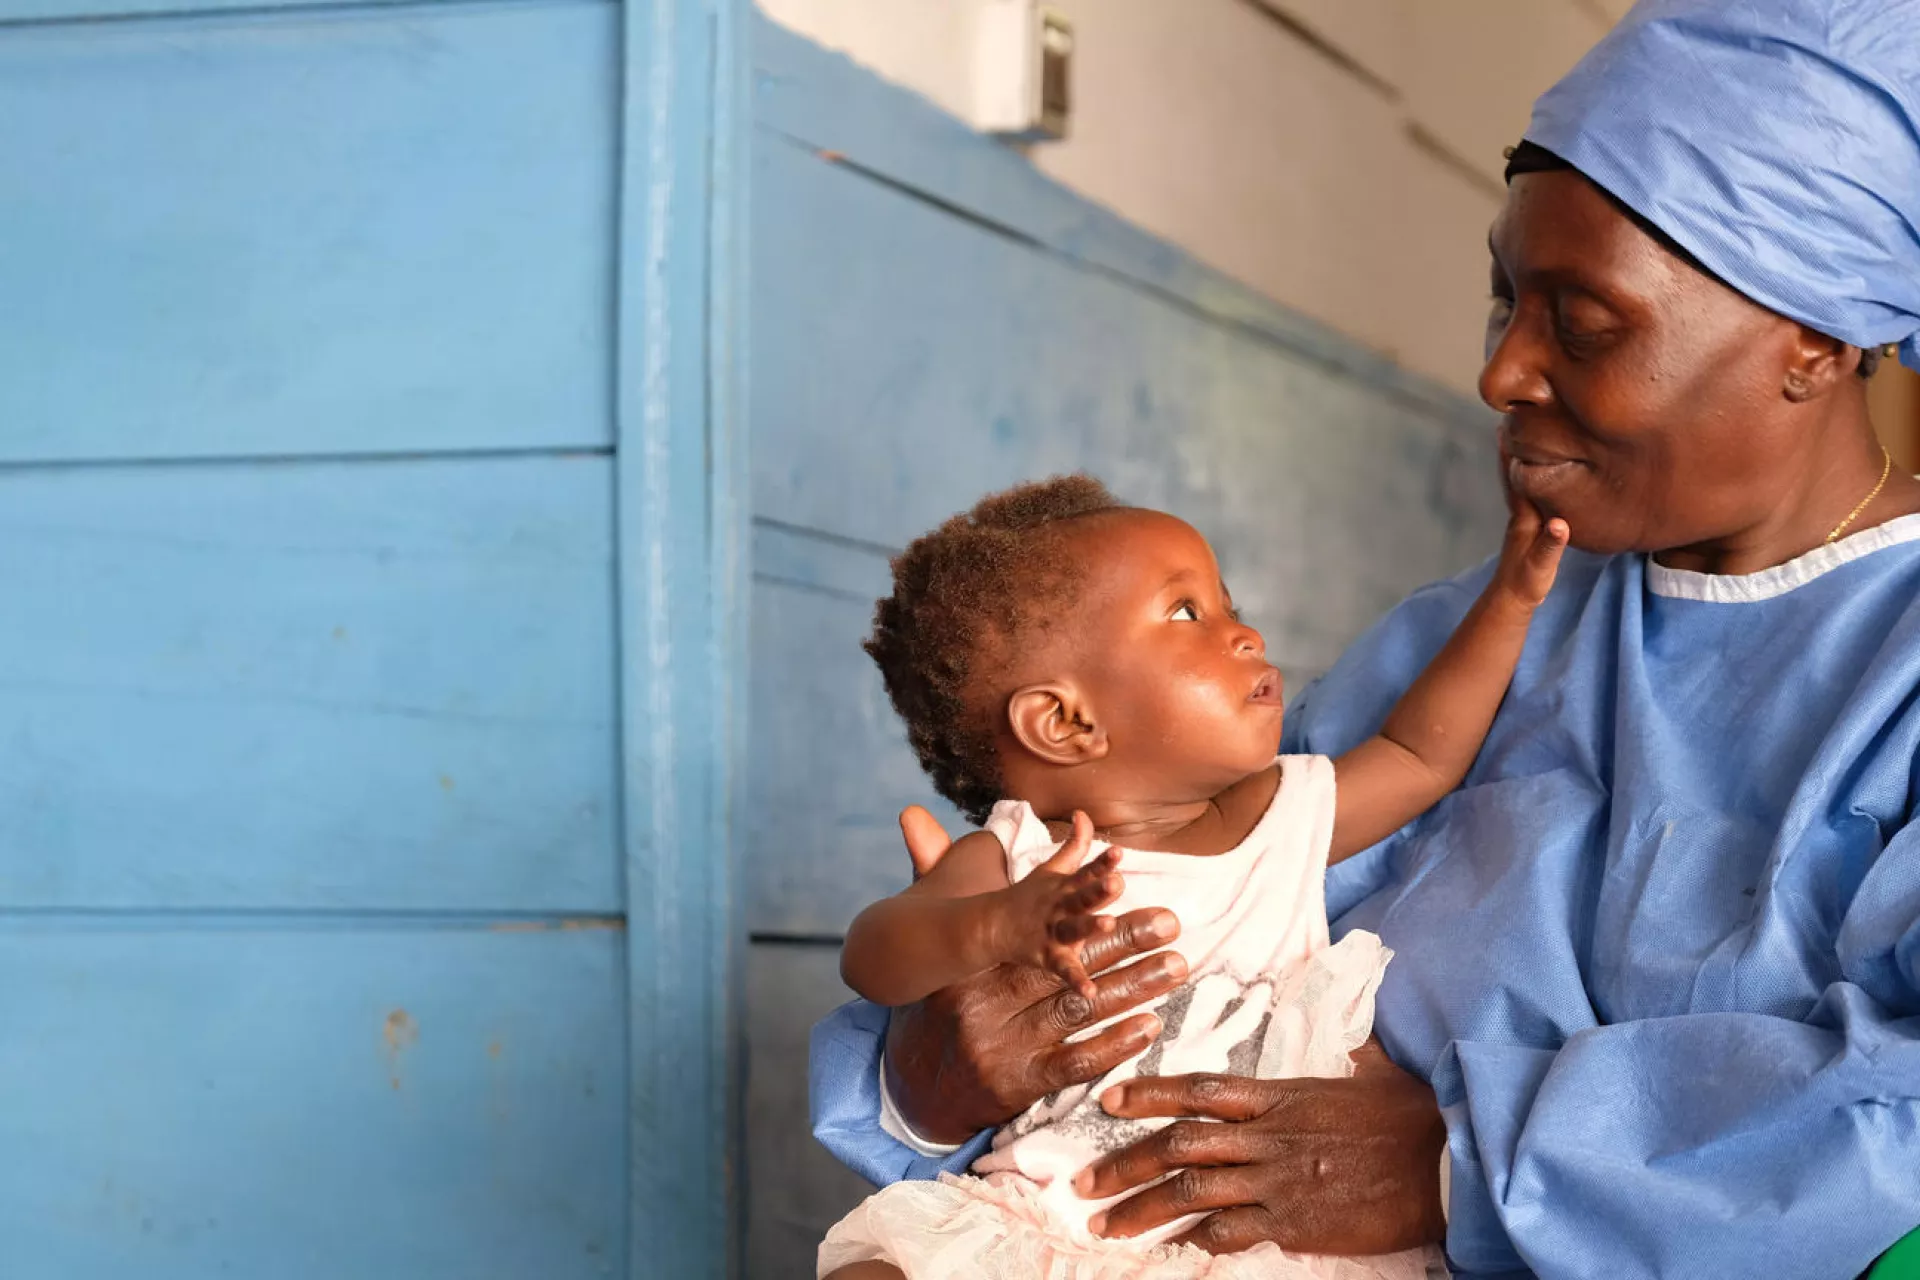 Democratic Republic of the Congo. An Ebola survivor looks after a child at a treatment centre.